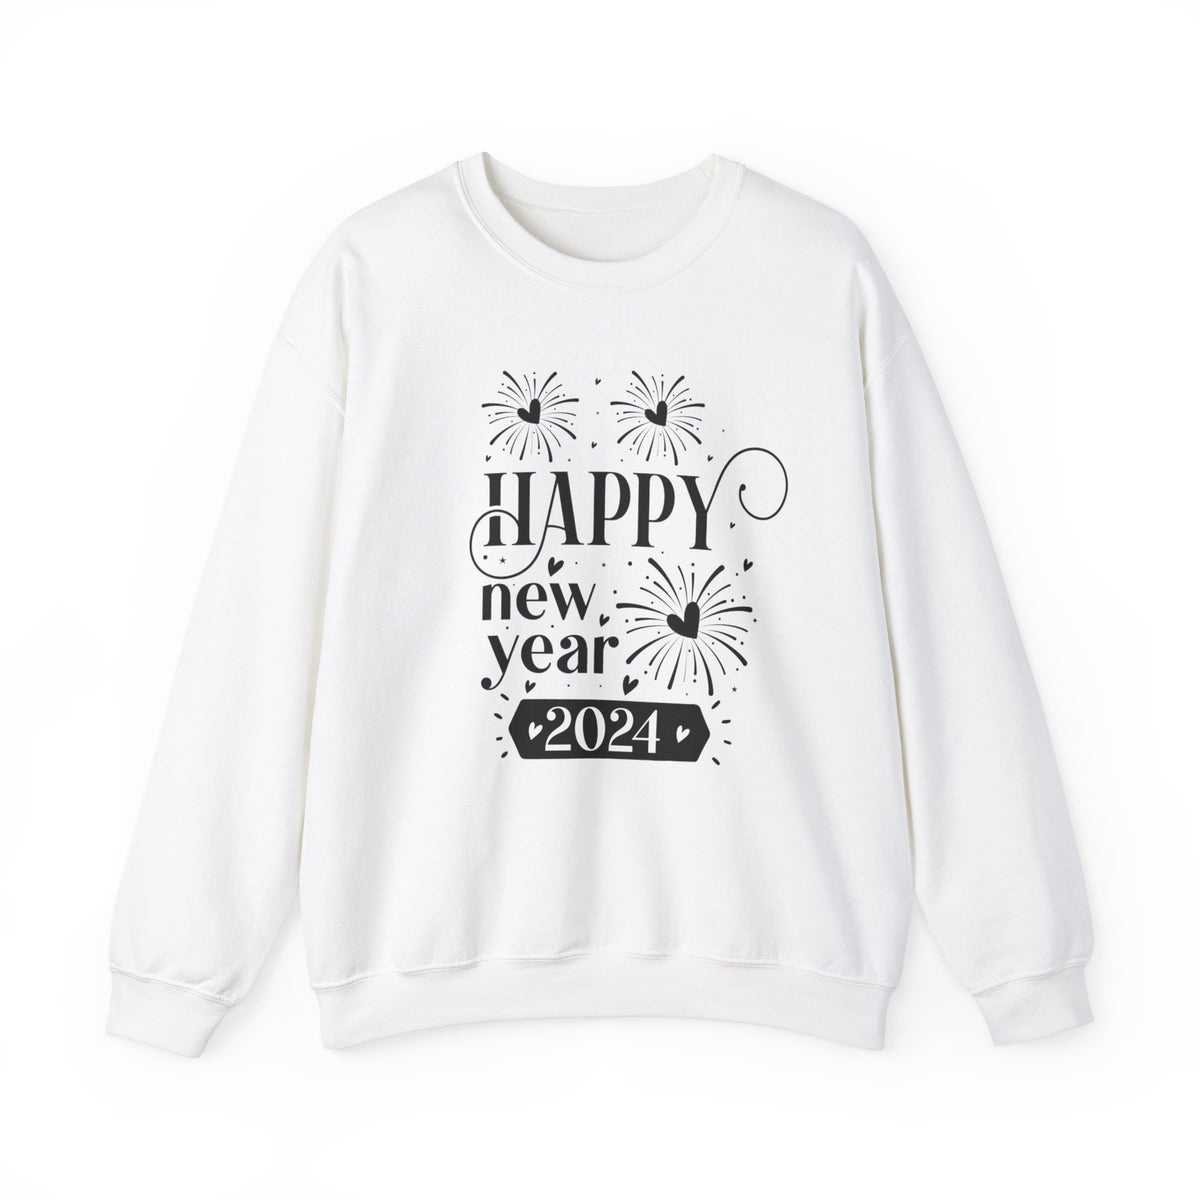 Happy new year ™ Crewneck Sweatshirt